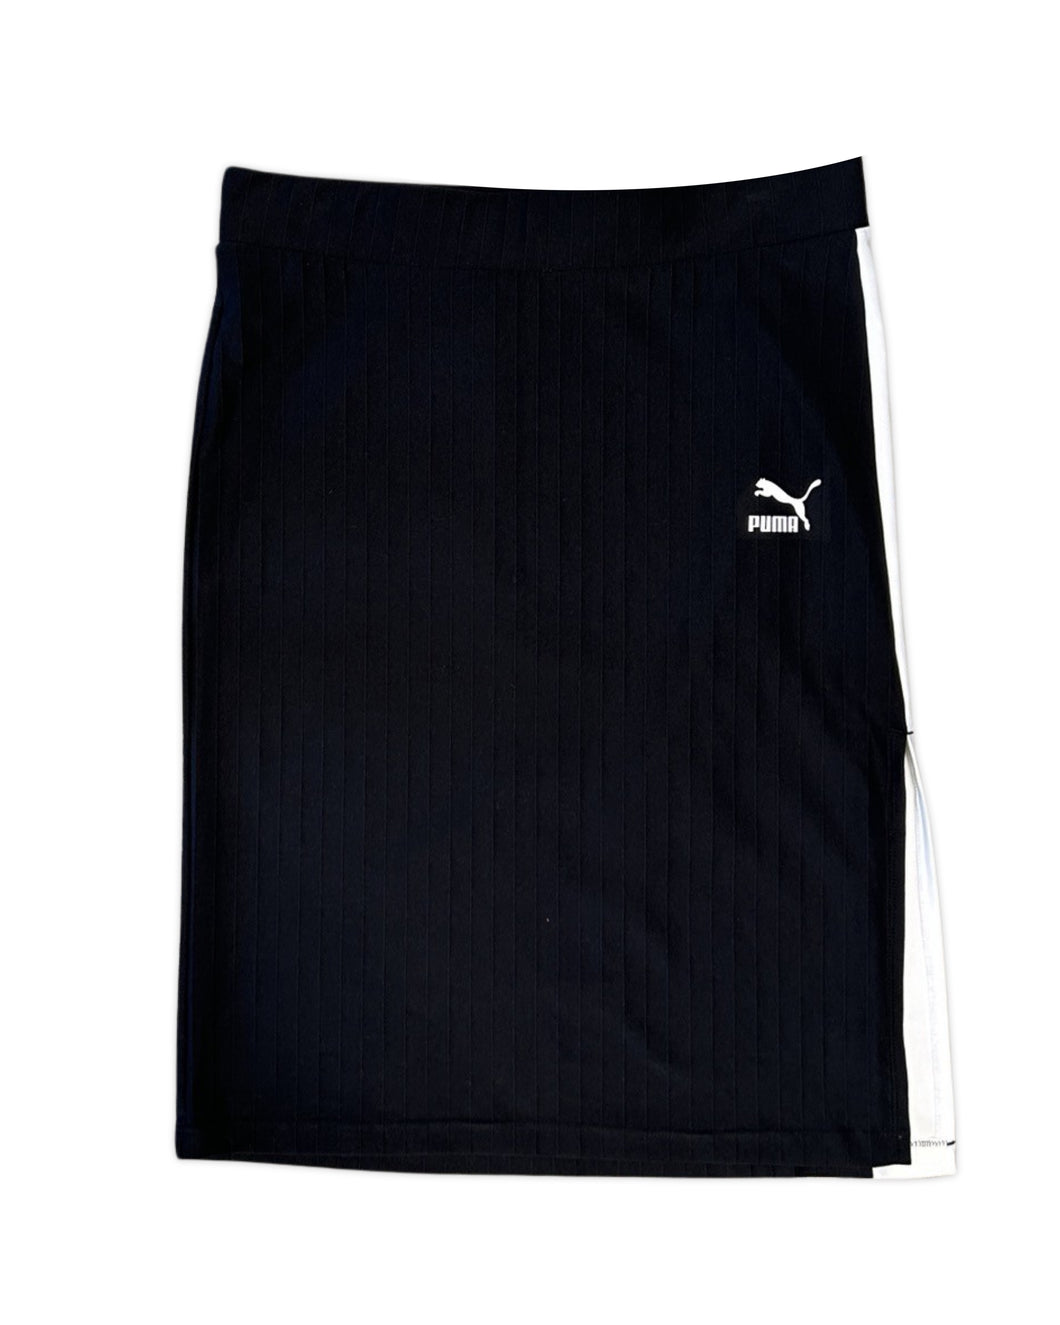 Puma Tennis Dress in Black ⏐ Size 32/34